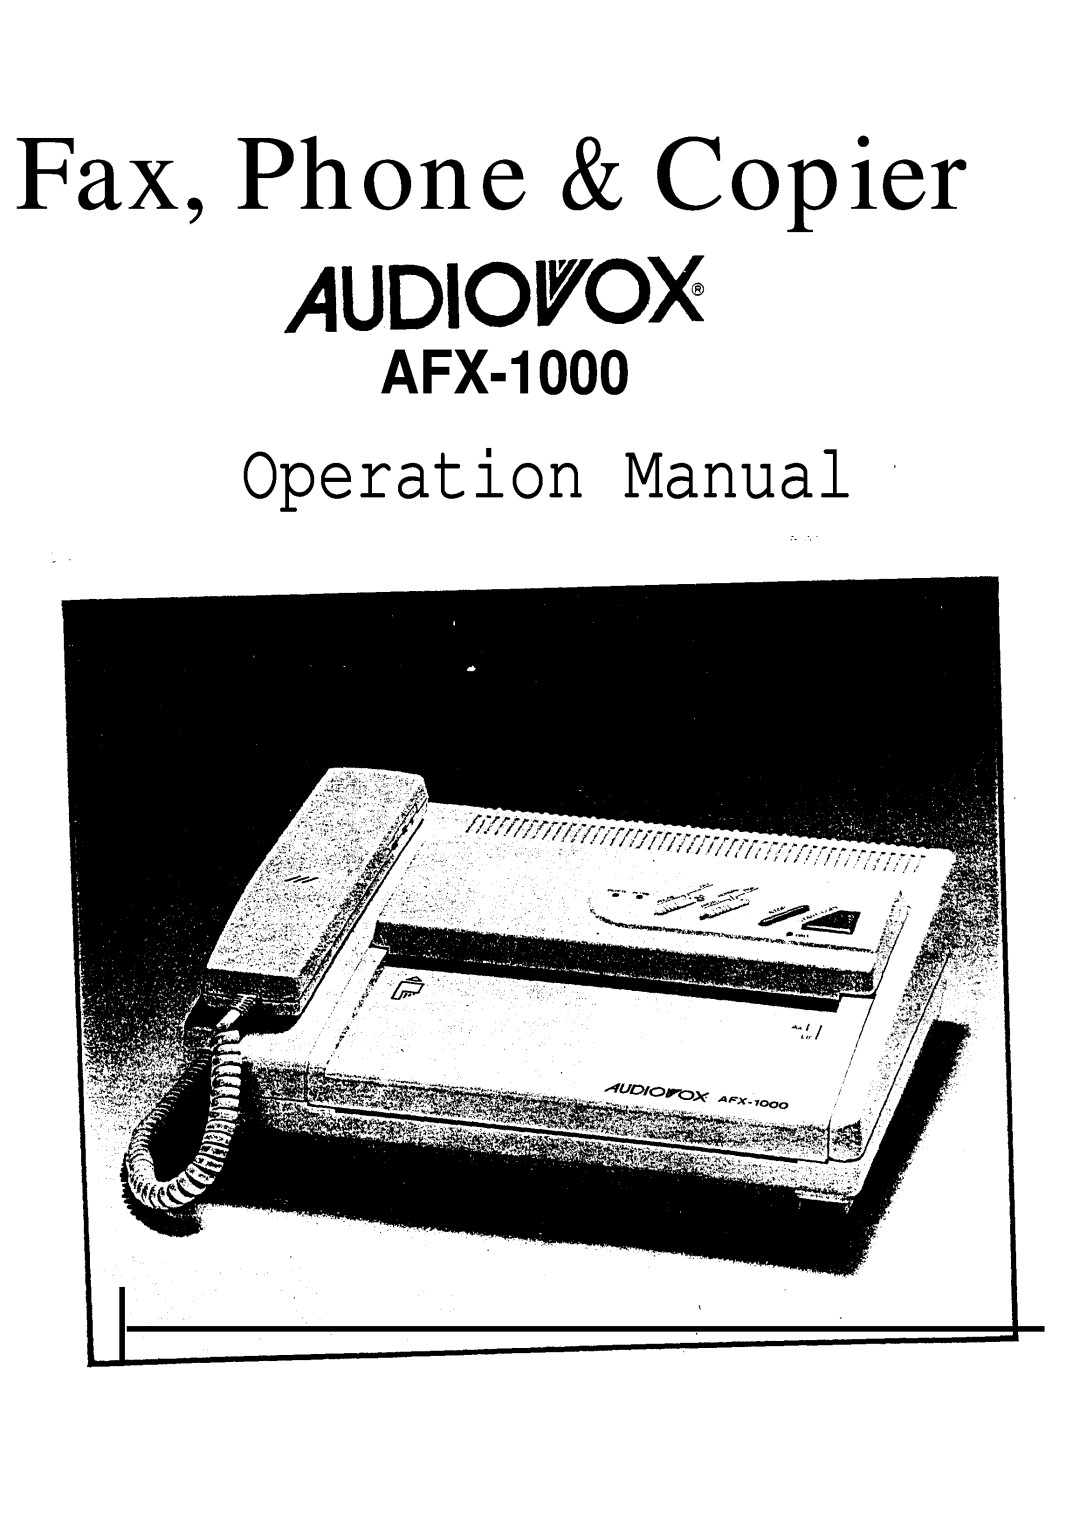 Audiovox AFX-1000 operation manual Fax, Phone & Copier, Audiovox, Operation Manual a 